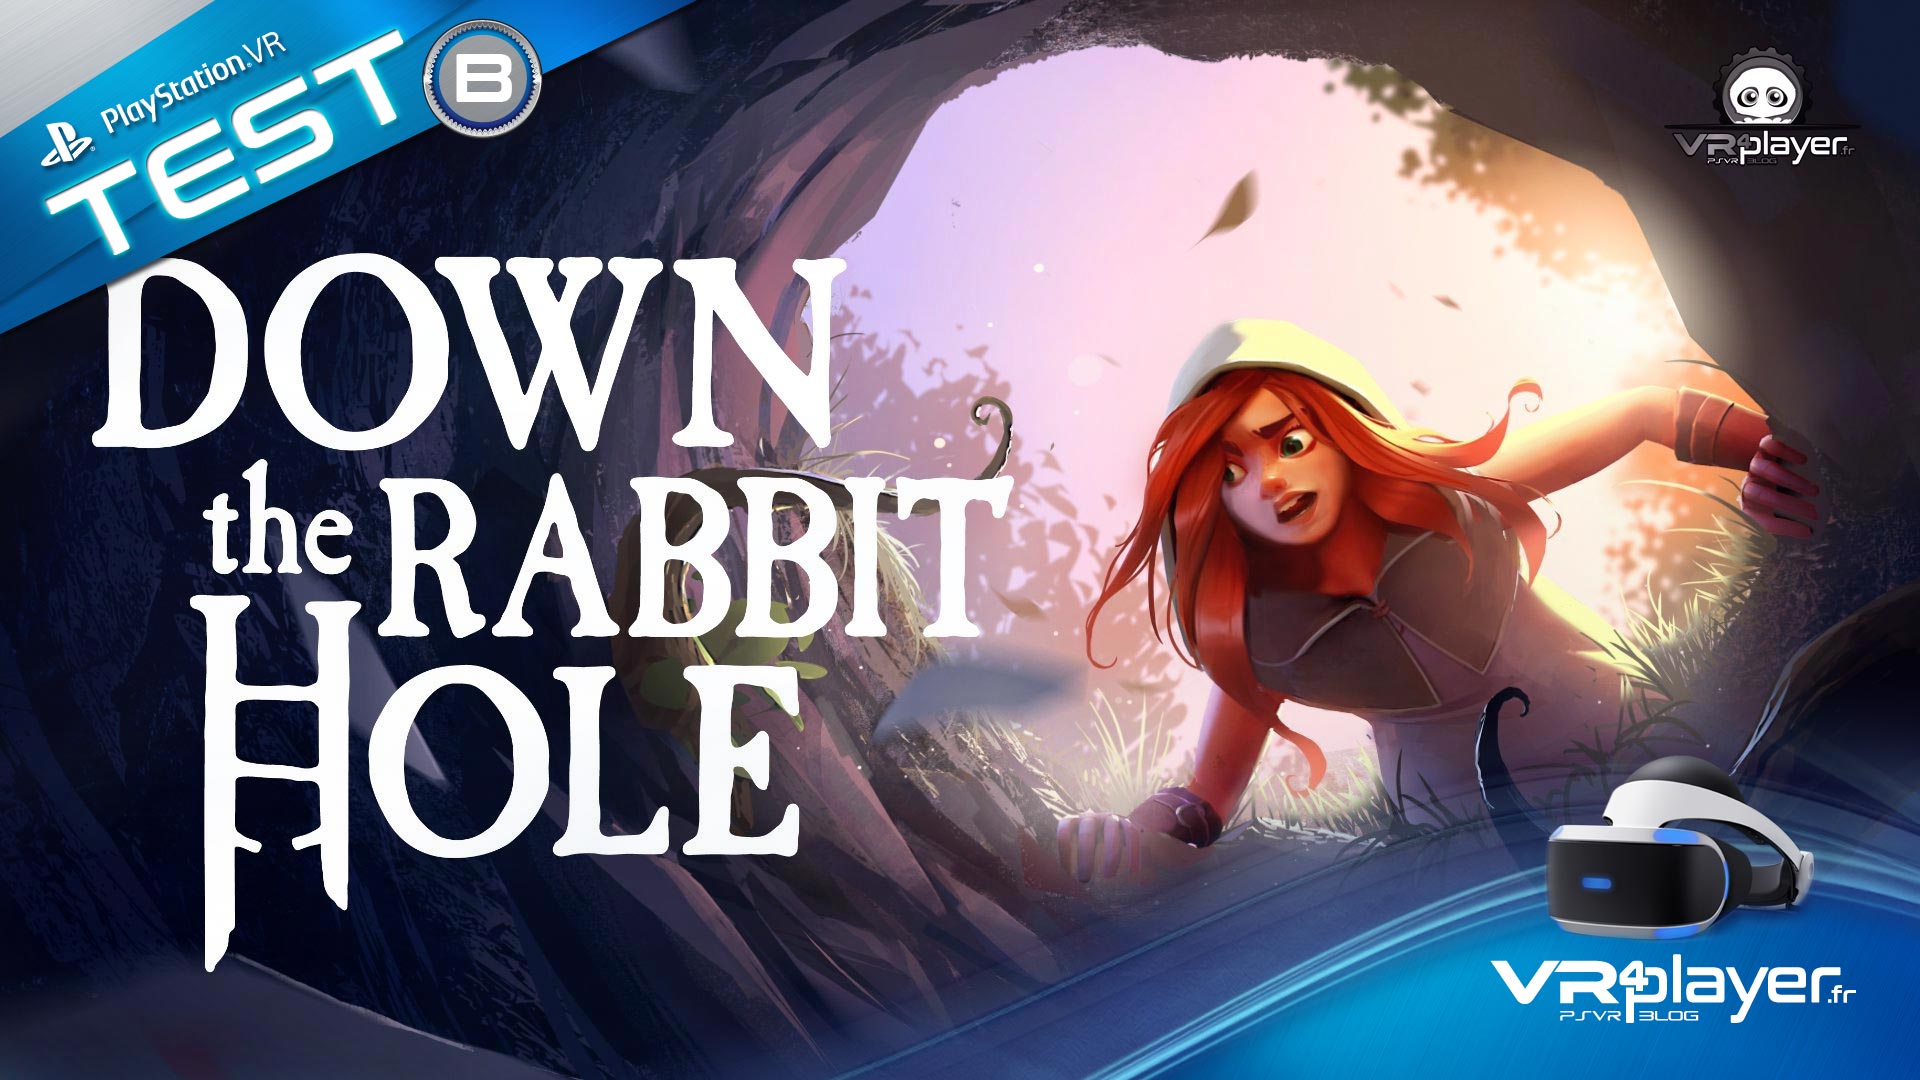 Раббит хол. Down the Rabbit hole. Rabbit hole игра. Down the Rabbit hole VR Oculus. Down the Rabbit hole v430+01.03 -qu.